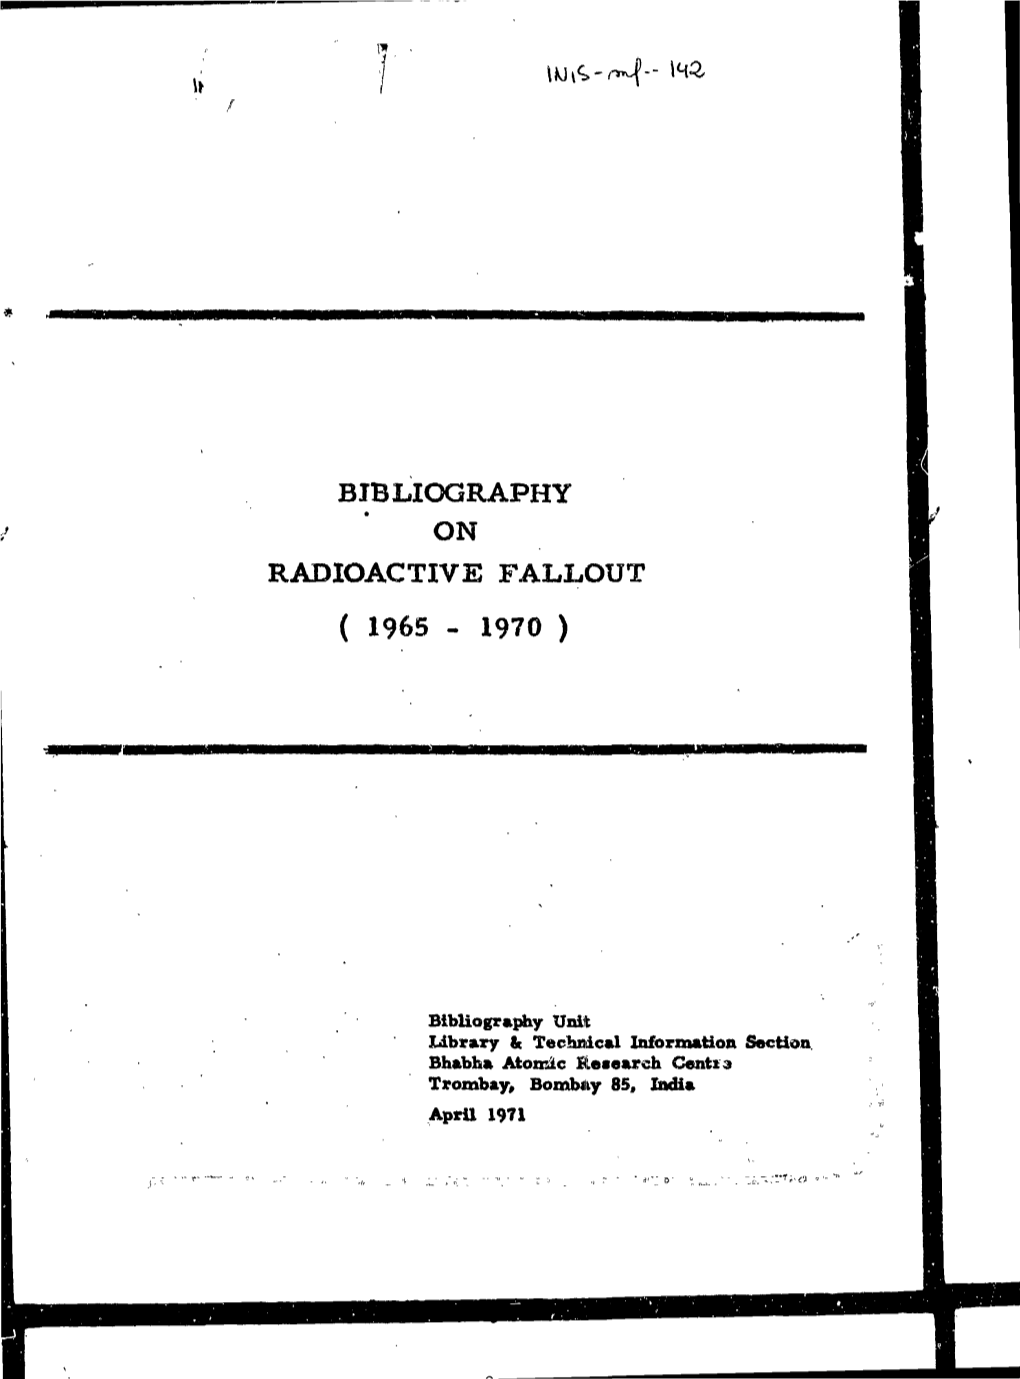 Bibliography on Radioactive Fallout ( 1965 - 1970 )